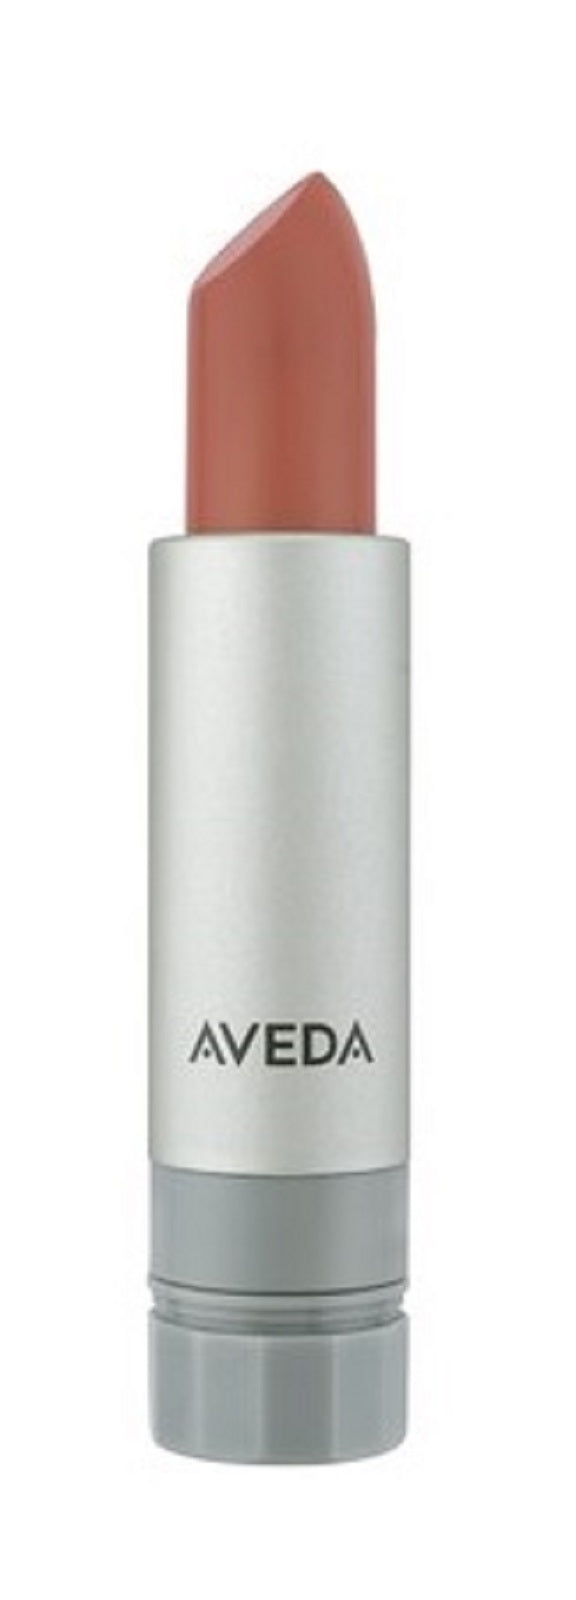 AVEDA new nib lipstick lip color Coral Sand 956 Nourish-Mint discontinued